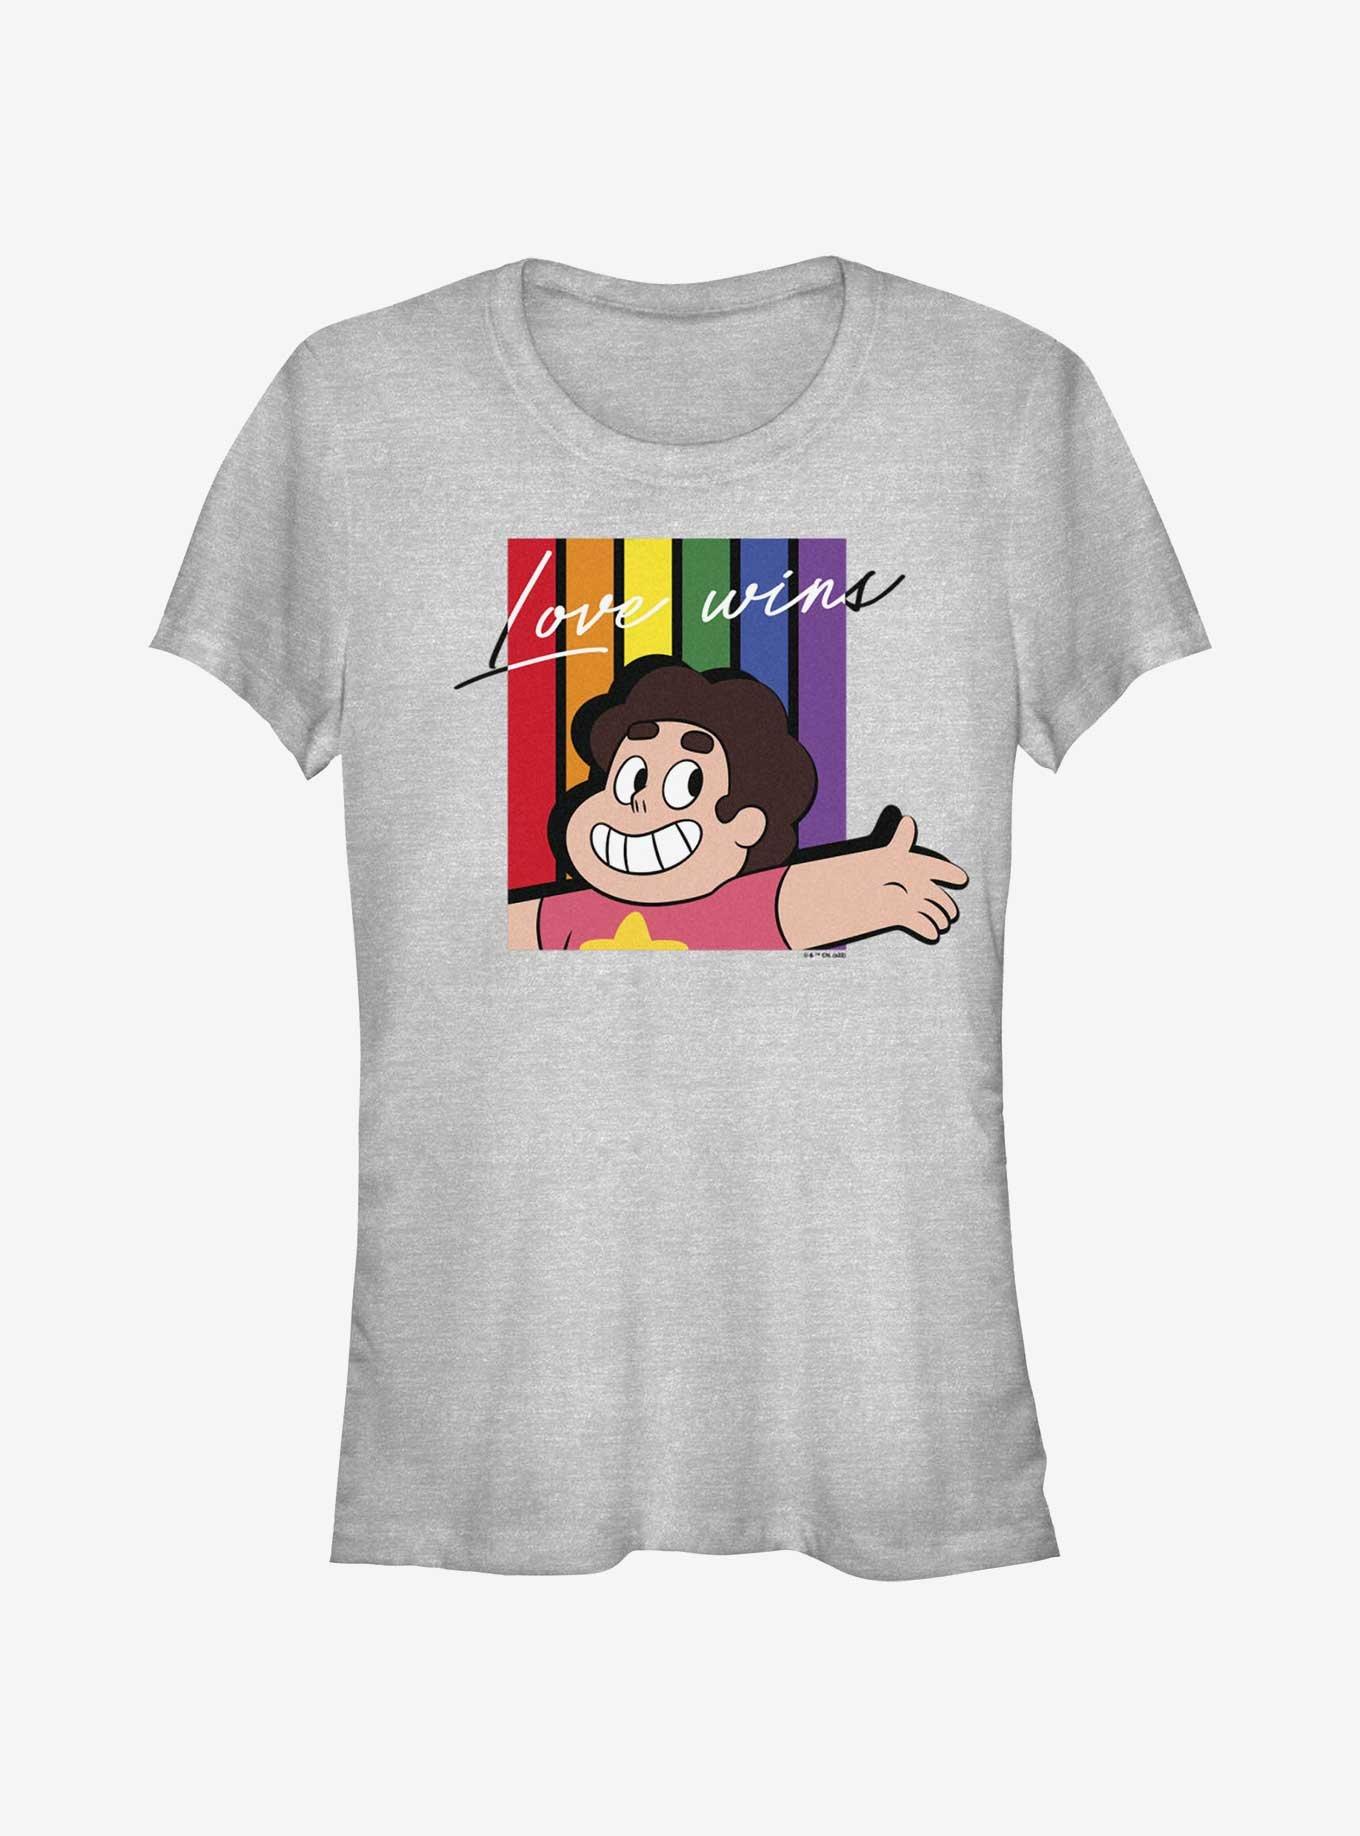 Steven Universe Love Wins Pride T-Shirt